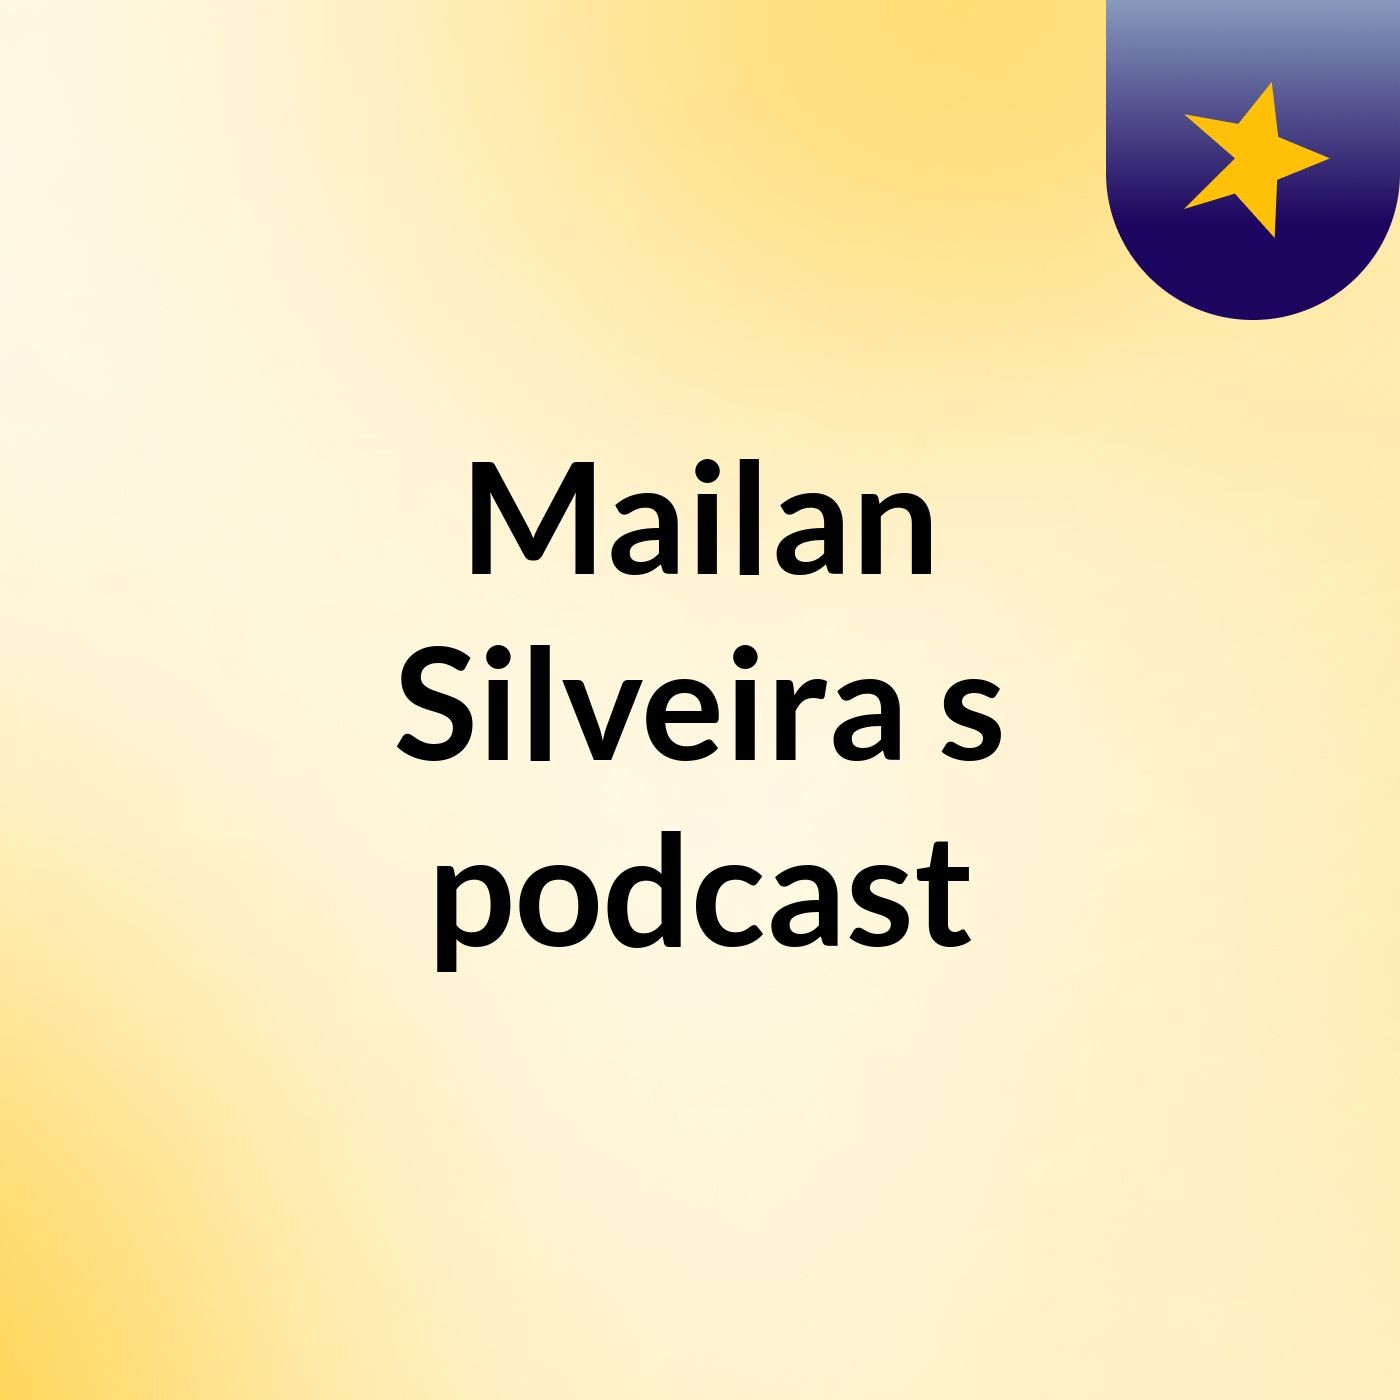 Mailan Silveira's podcast